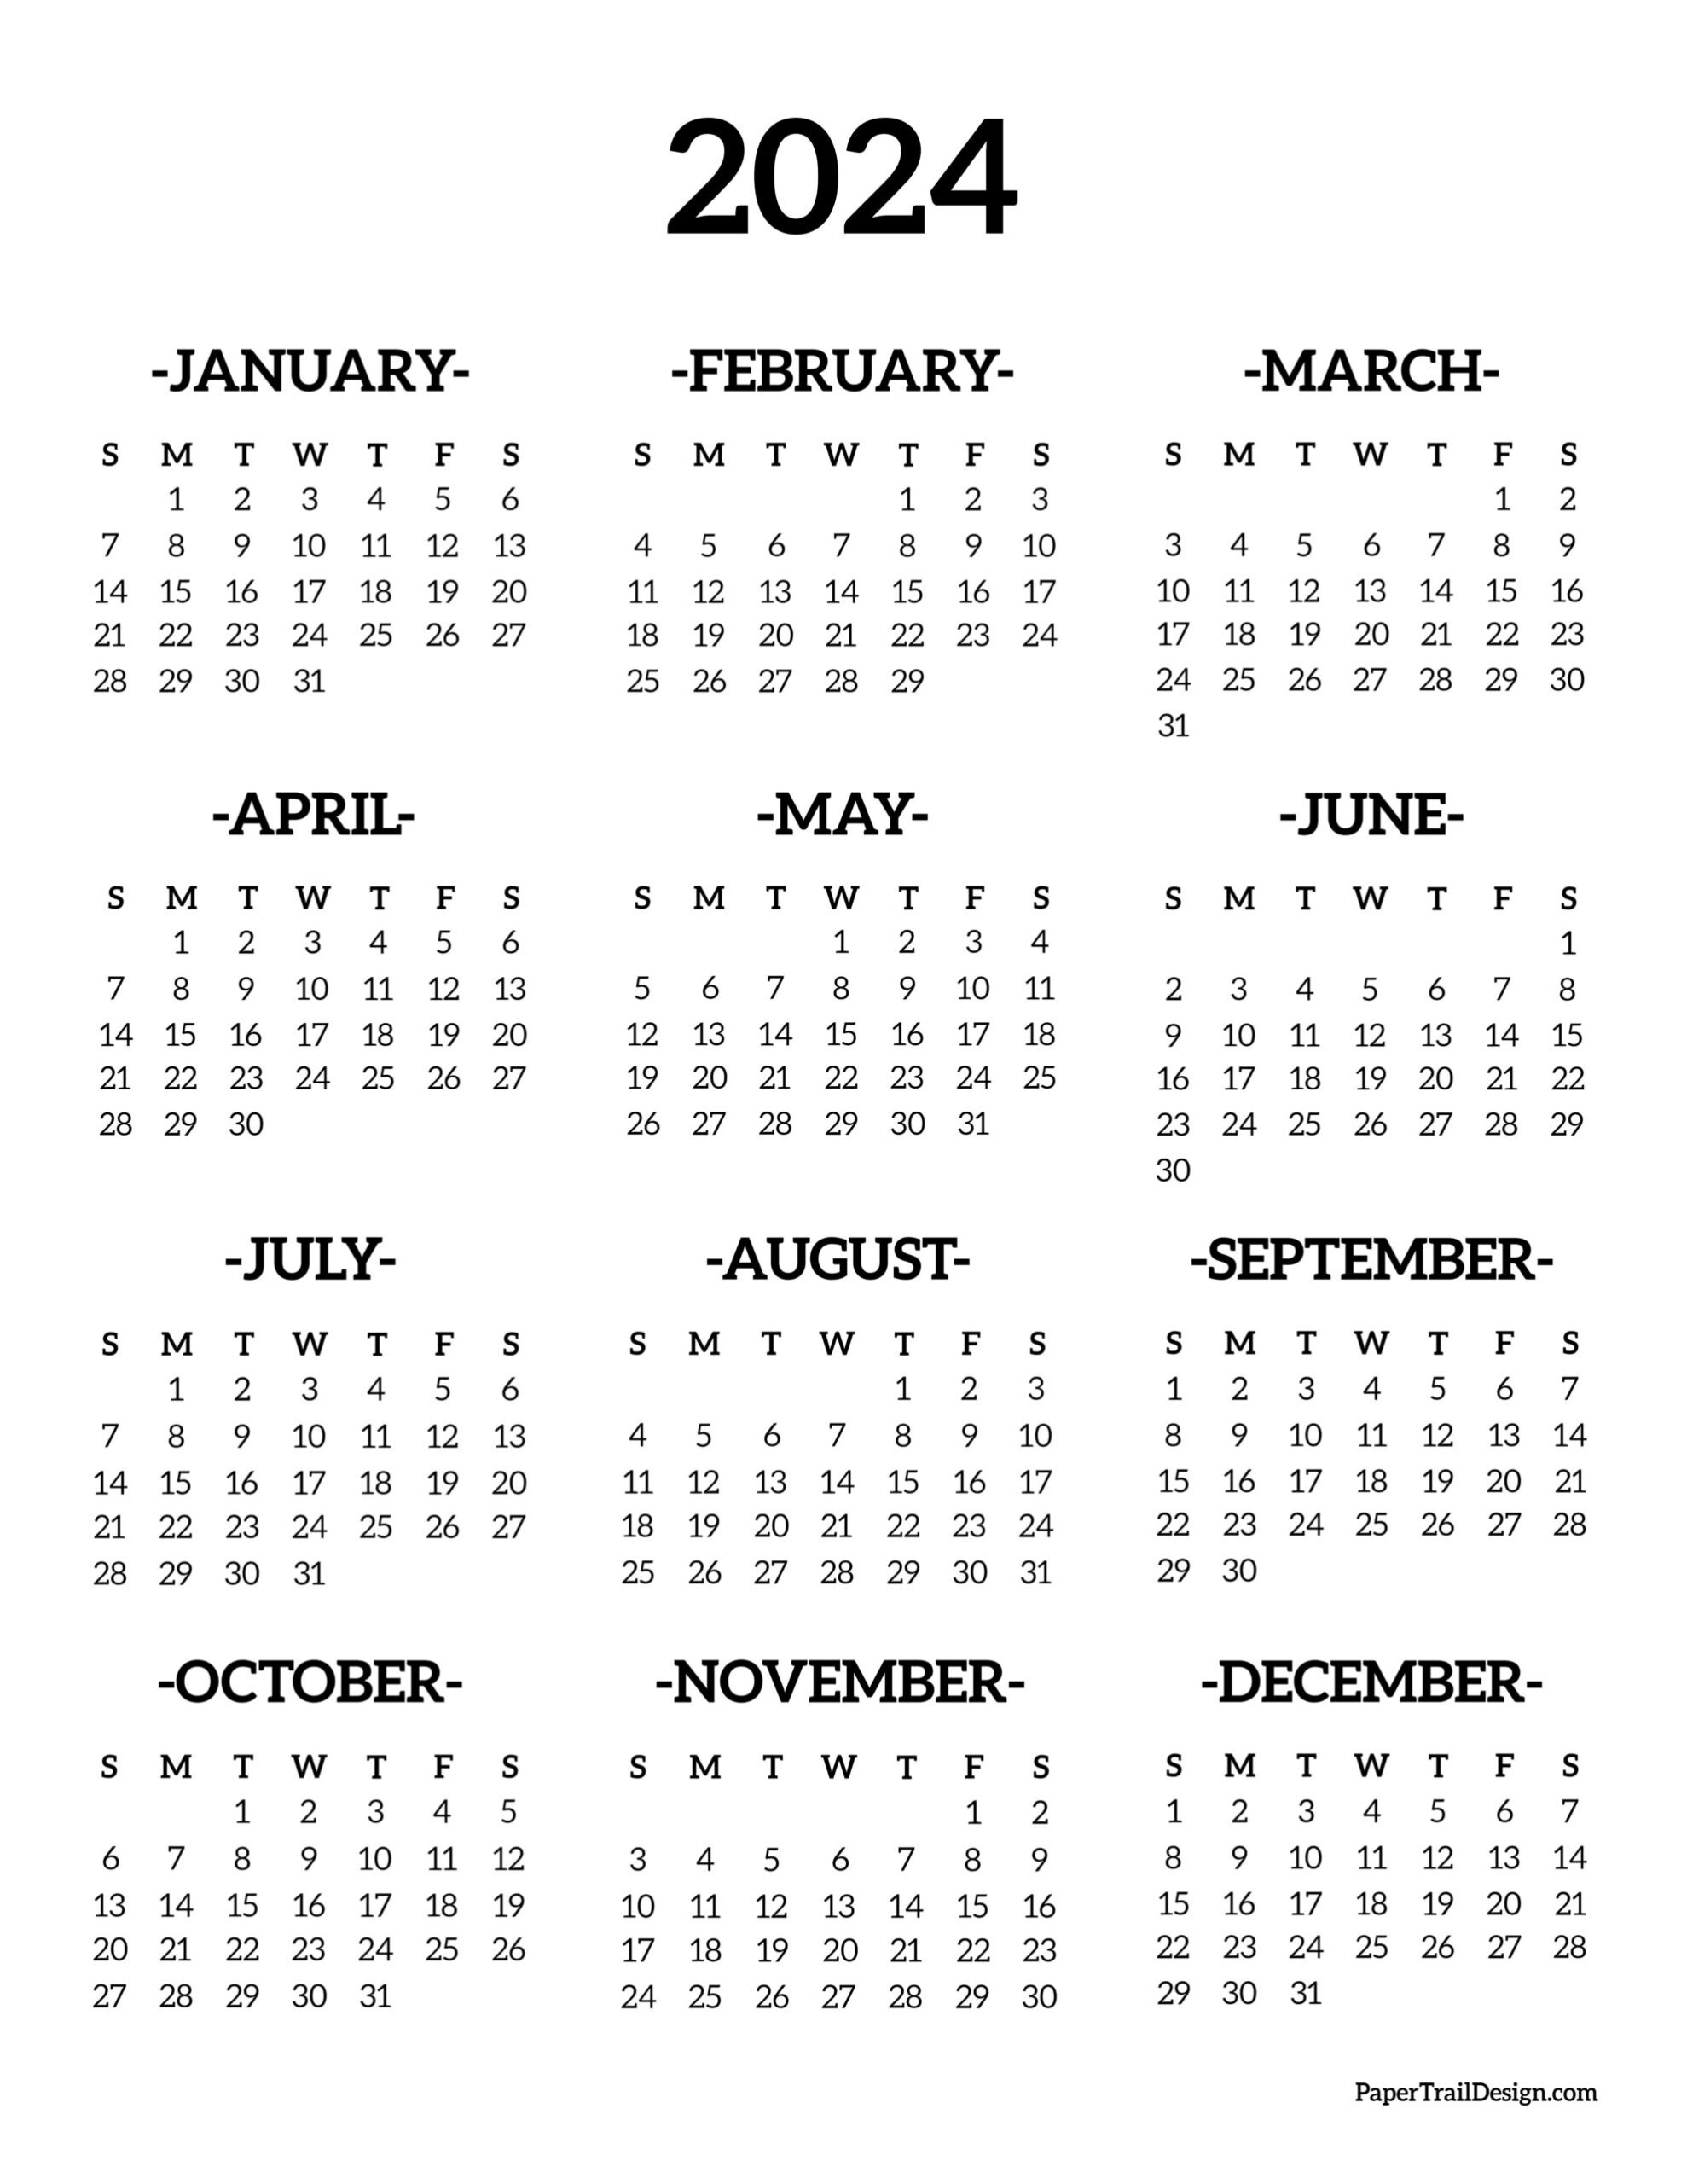 Calendar 2024 Printable One Page - Paper Trail Design |  Calendar 2024